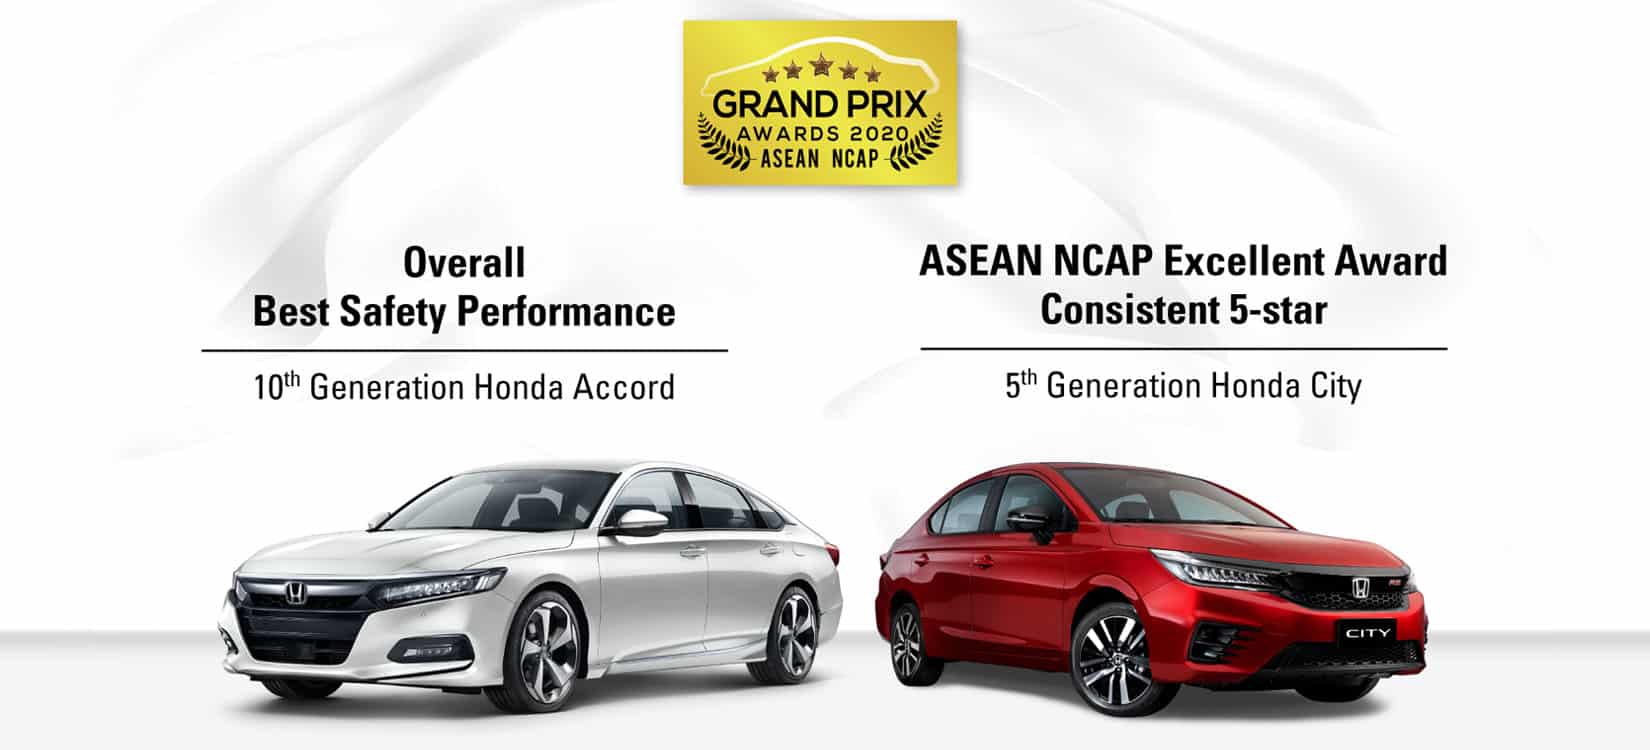 Honda Accord & Honda City Win Four Big Awards at ASEAN NCAP Grand Prix Awards 2020